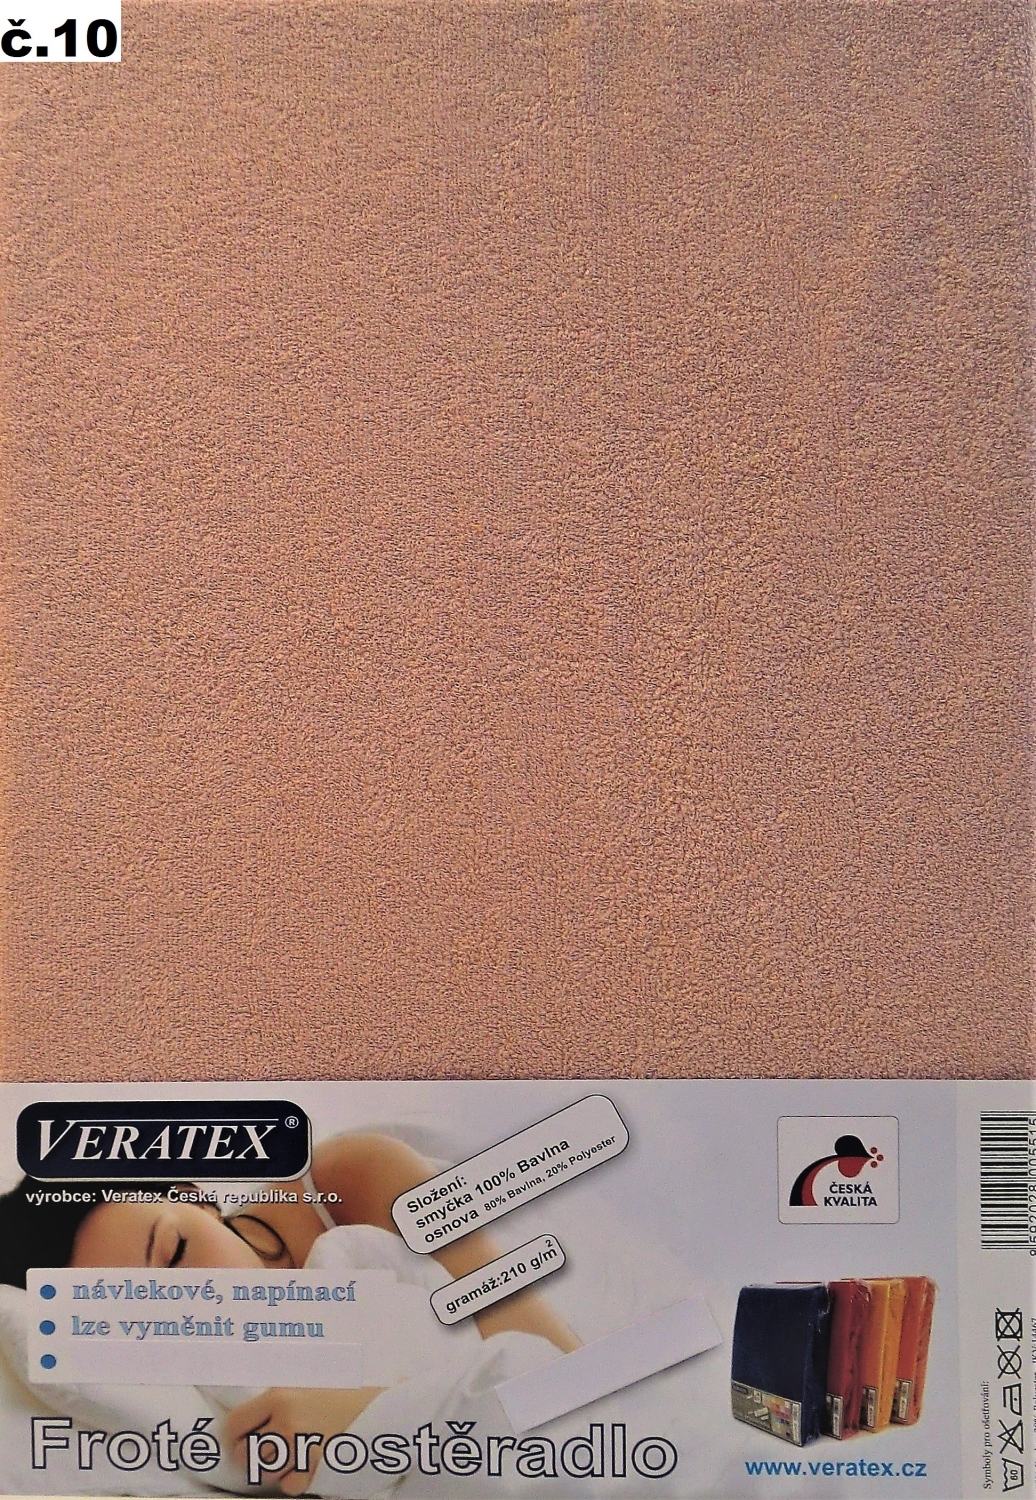 Veratex Froté prostěradlo 130x200/16 cm (č.10-starorůžová)